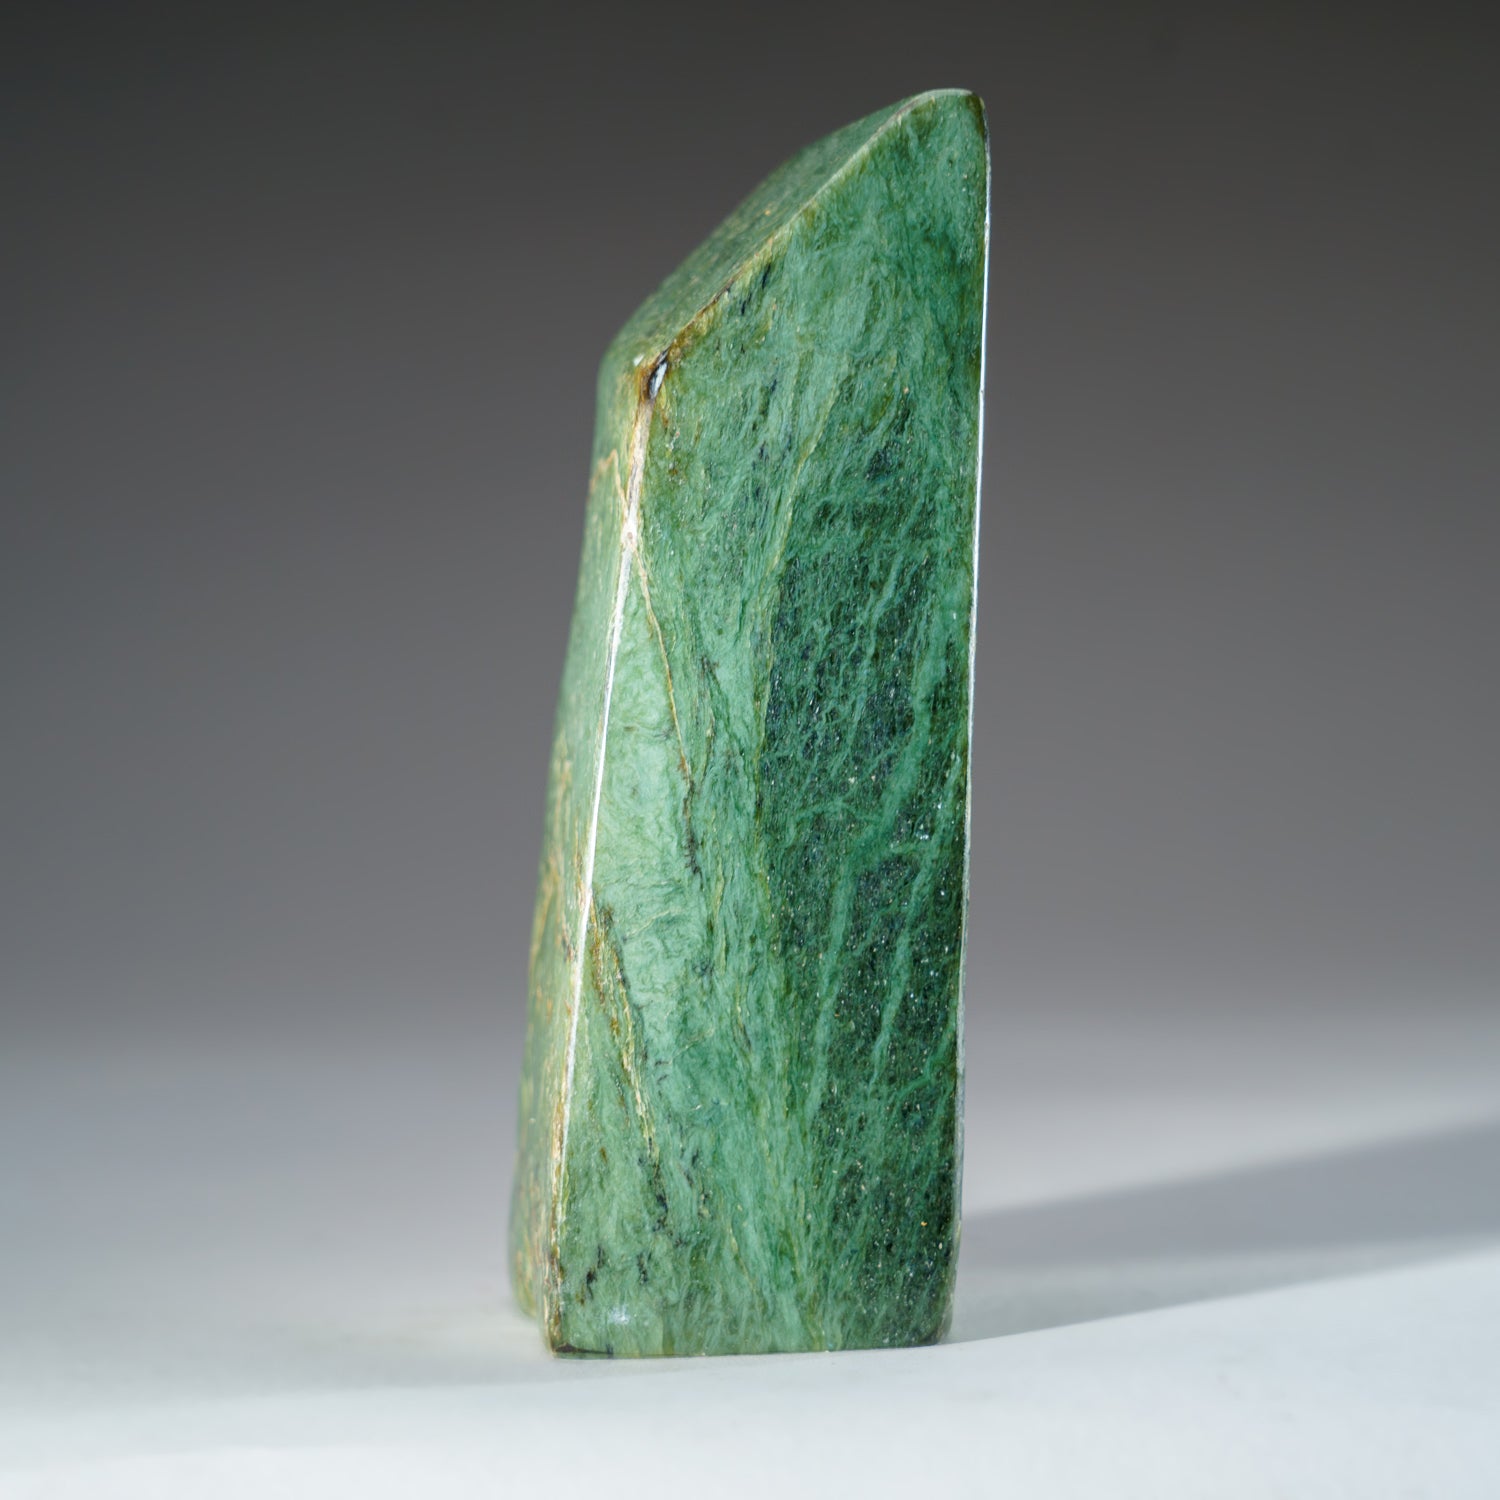 Polished Nephrite Jade Freeform from Pakistan (2.1 lbs)